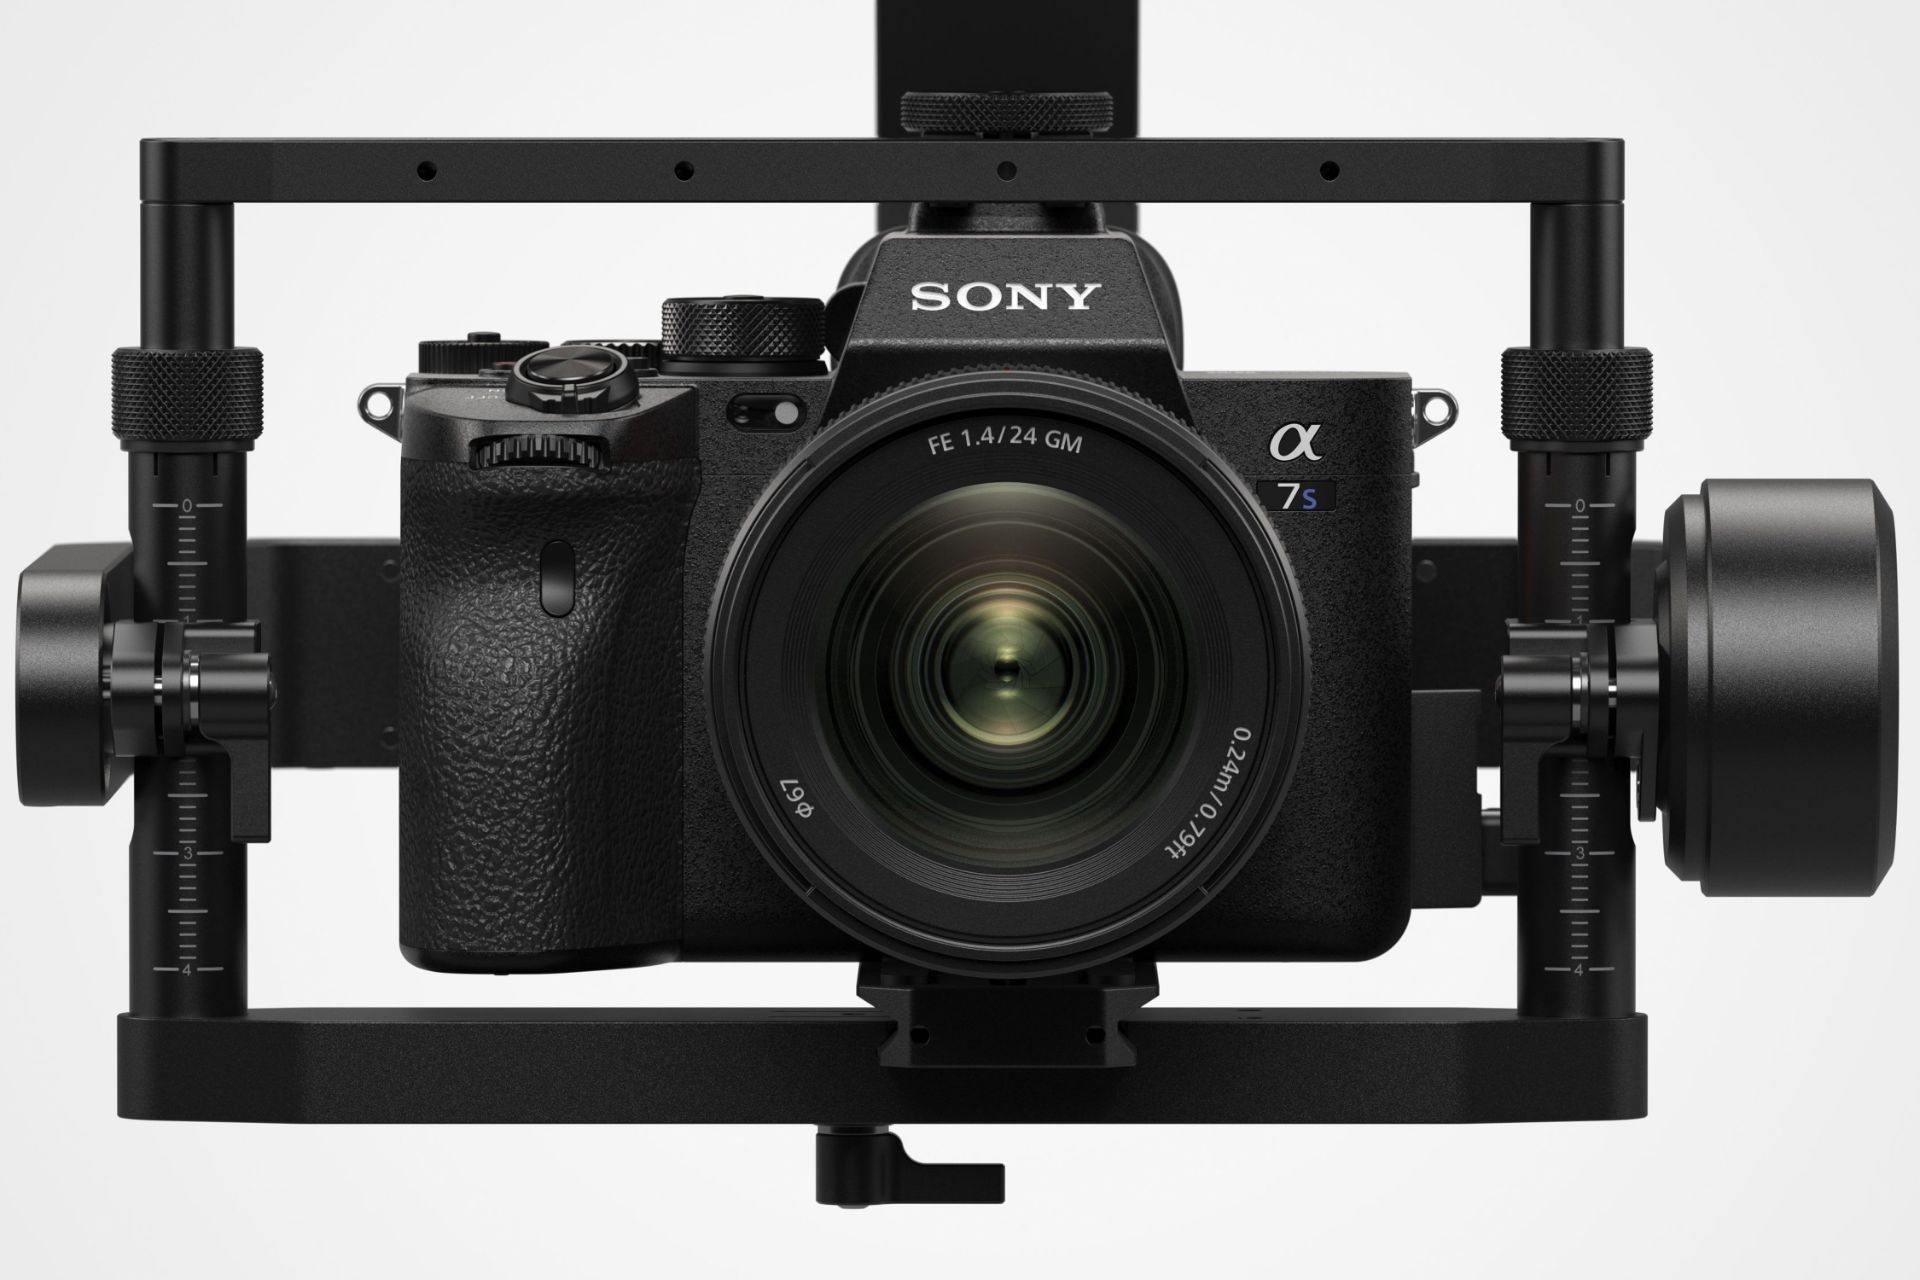 دوربین آلفا 7s سونی در گیمبال پهپاد پهپاد سونی ایرپیک / Sony Airpeak